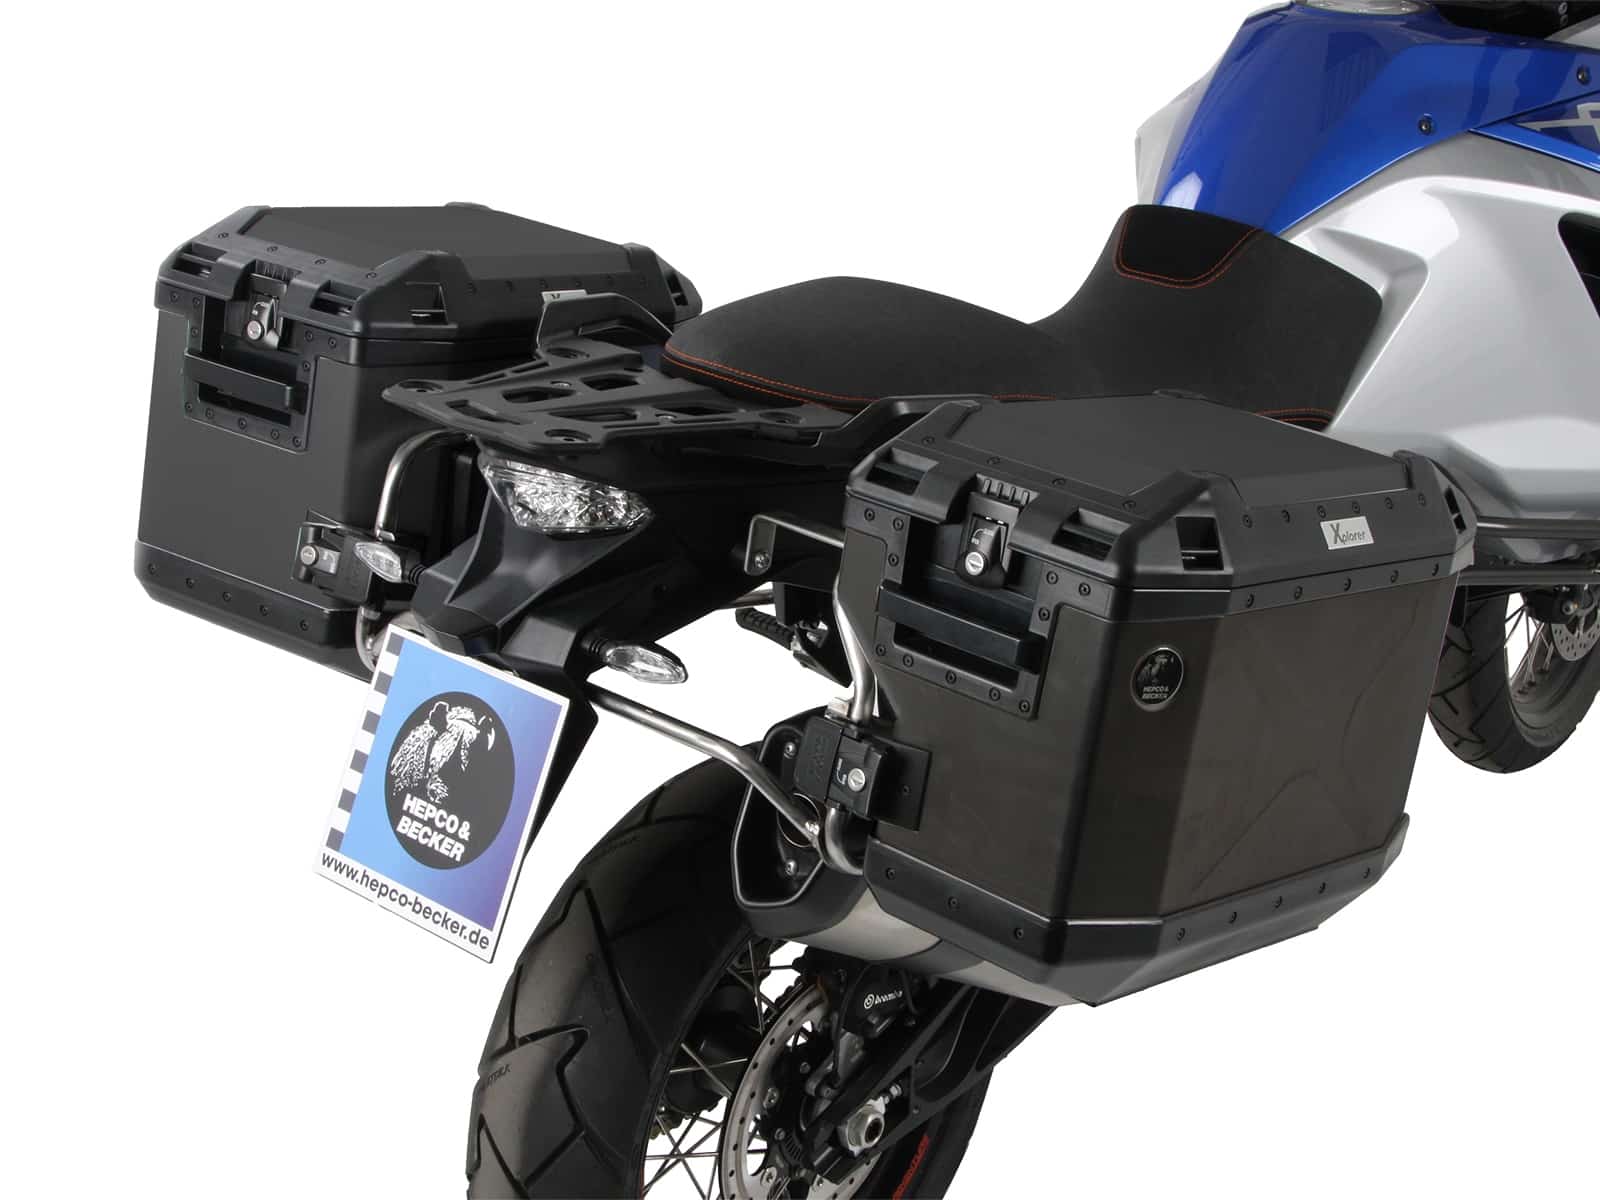 Kofferträgerset Cutout Edelstahlträger inkl. Xplorer schwarz Kofferset für KTM 1090 Adventure R (2017-)